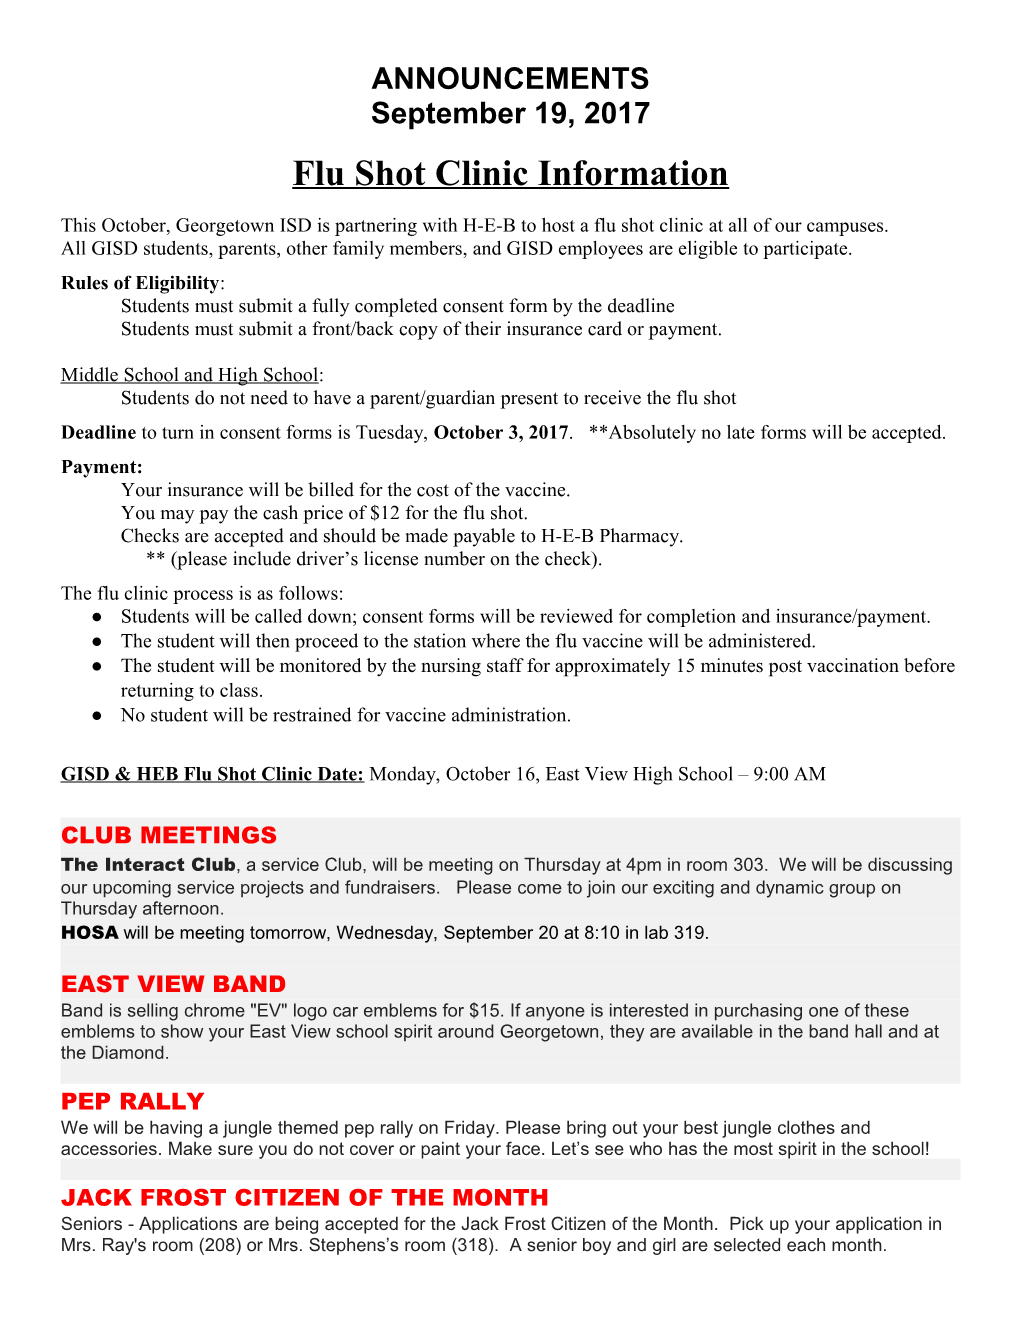 Flu Shot Clinic Information